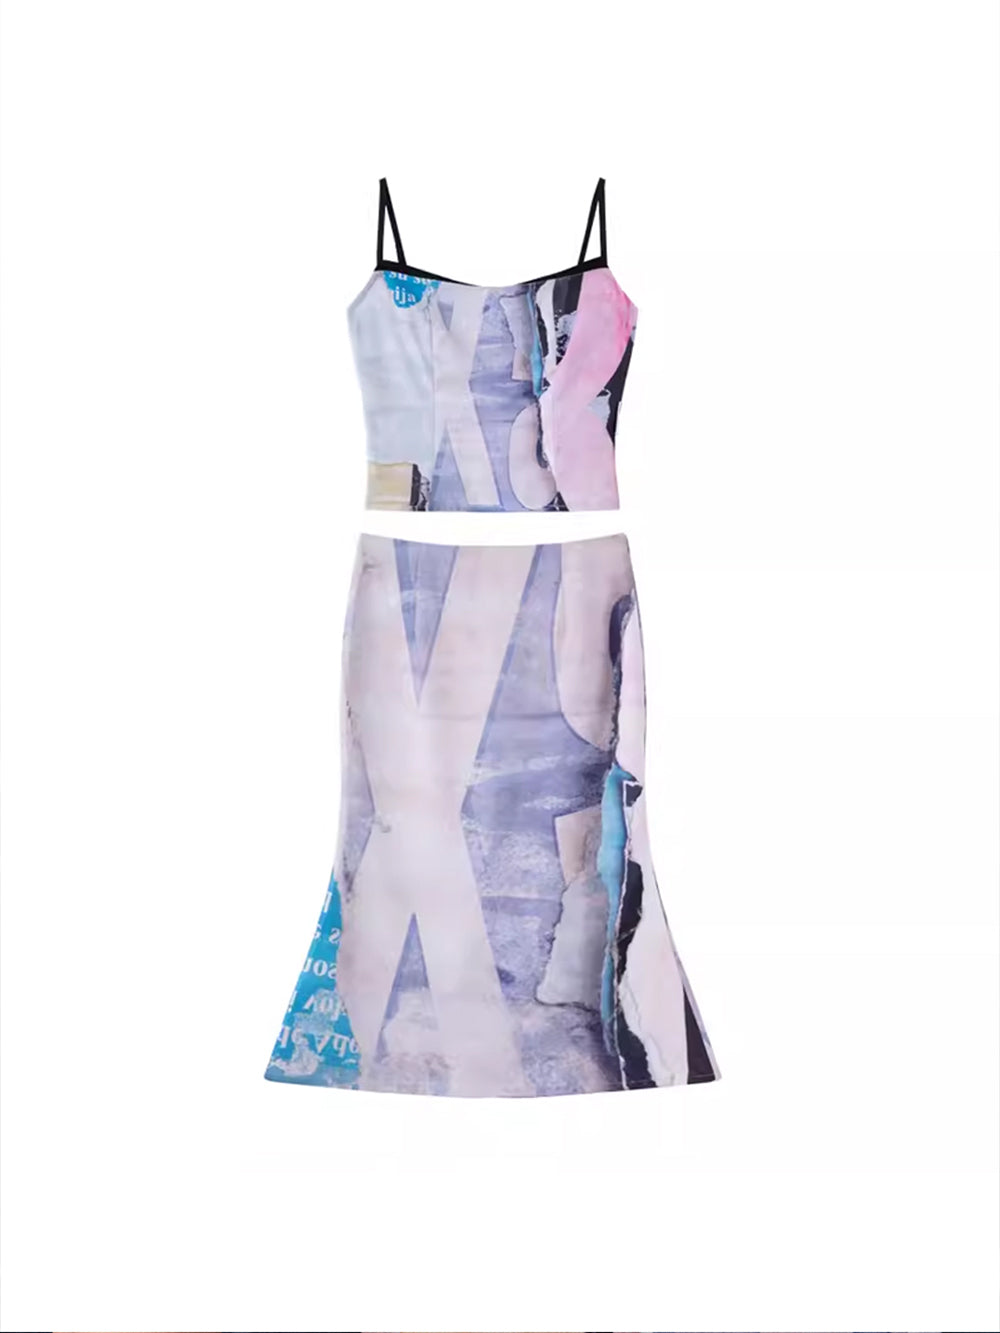 MUKTANK x Damage Asia Tropical Vacation Printed Dress Set (Top+Skirt)